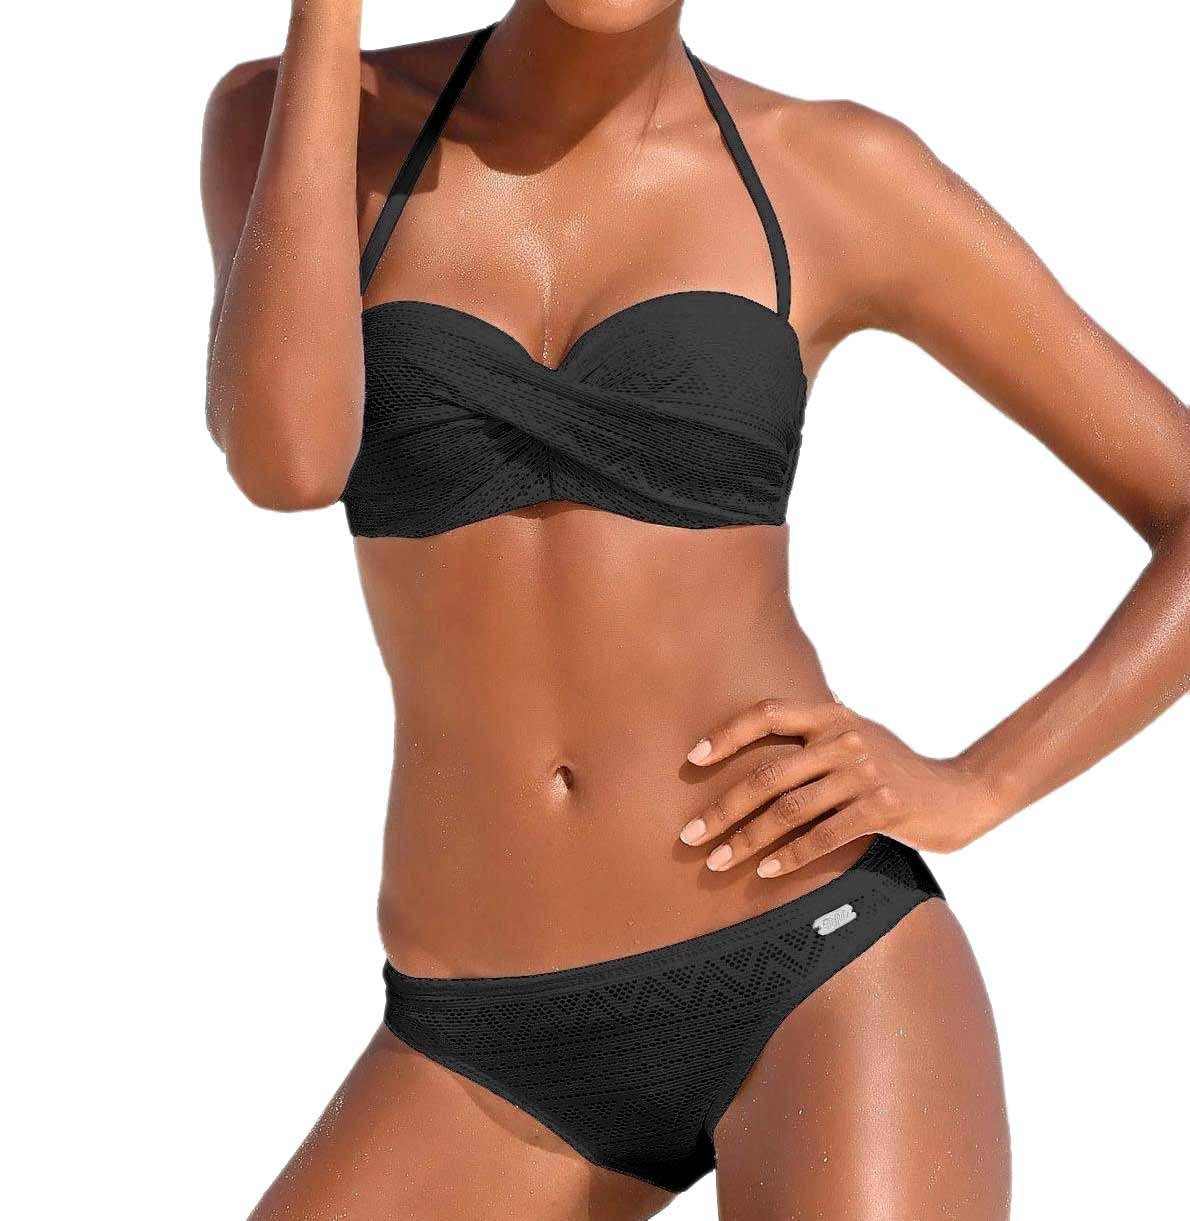 Buffalo Push-Up-Bikini »Buffalo Damen Marken-Push-up-Bandeau-Bikini,  schwarz, C-Cup« online kaufen | OTTO